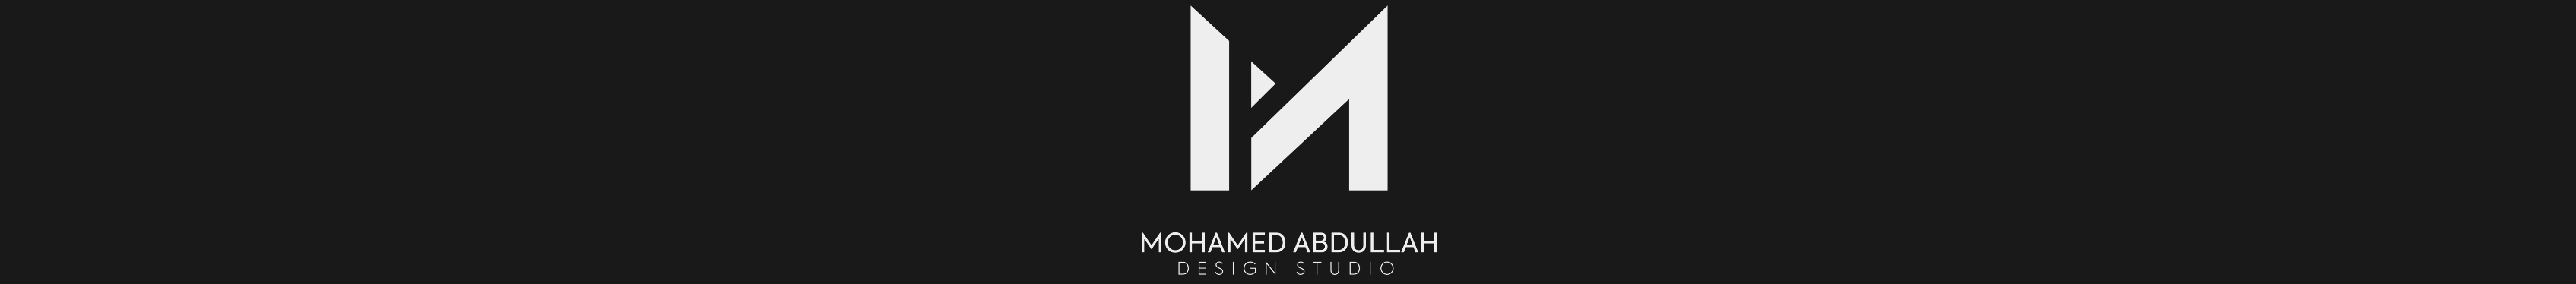 Banner de perfil de Muhammed Abdallah